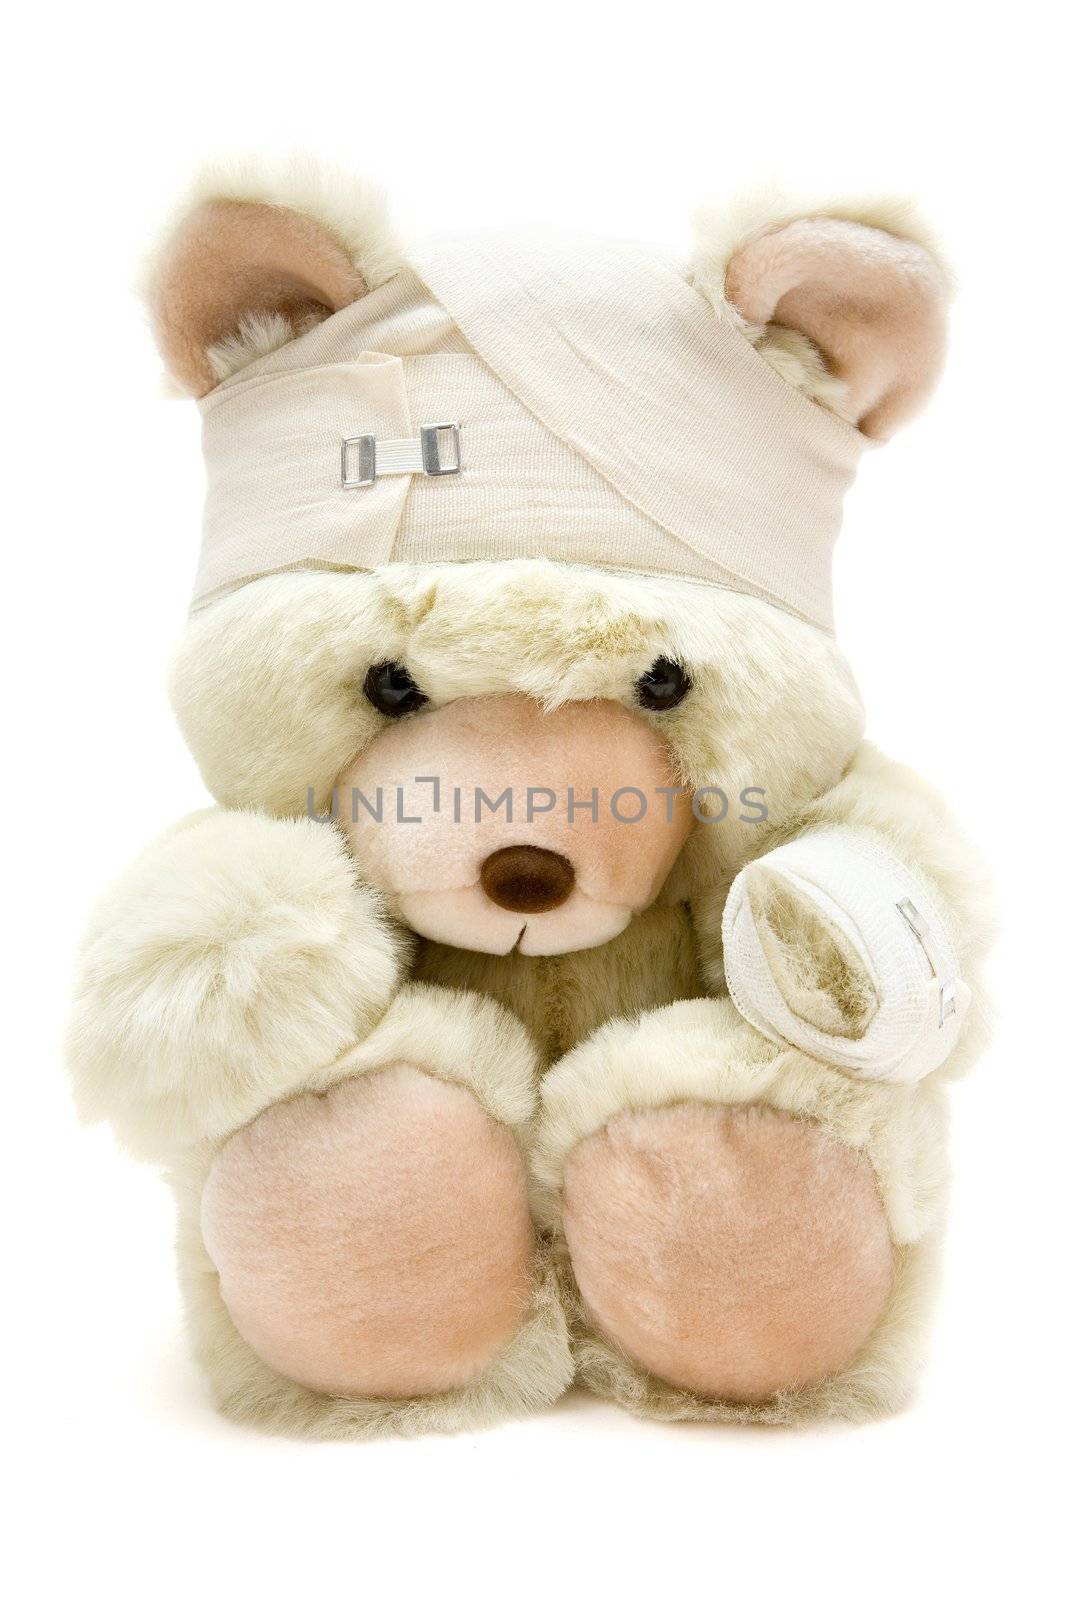 Bandaged Teddy by winterling